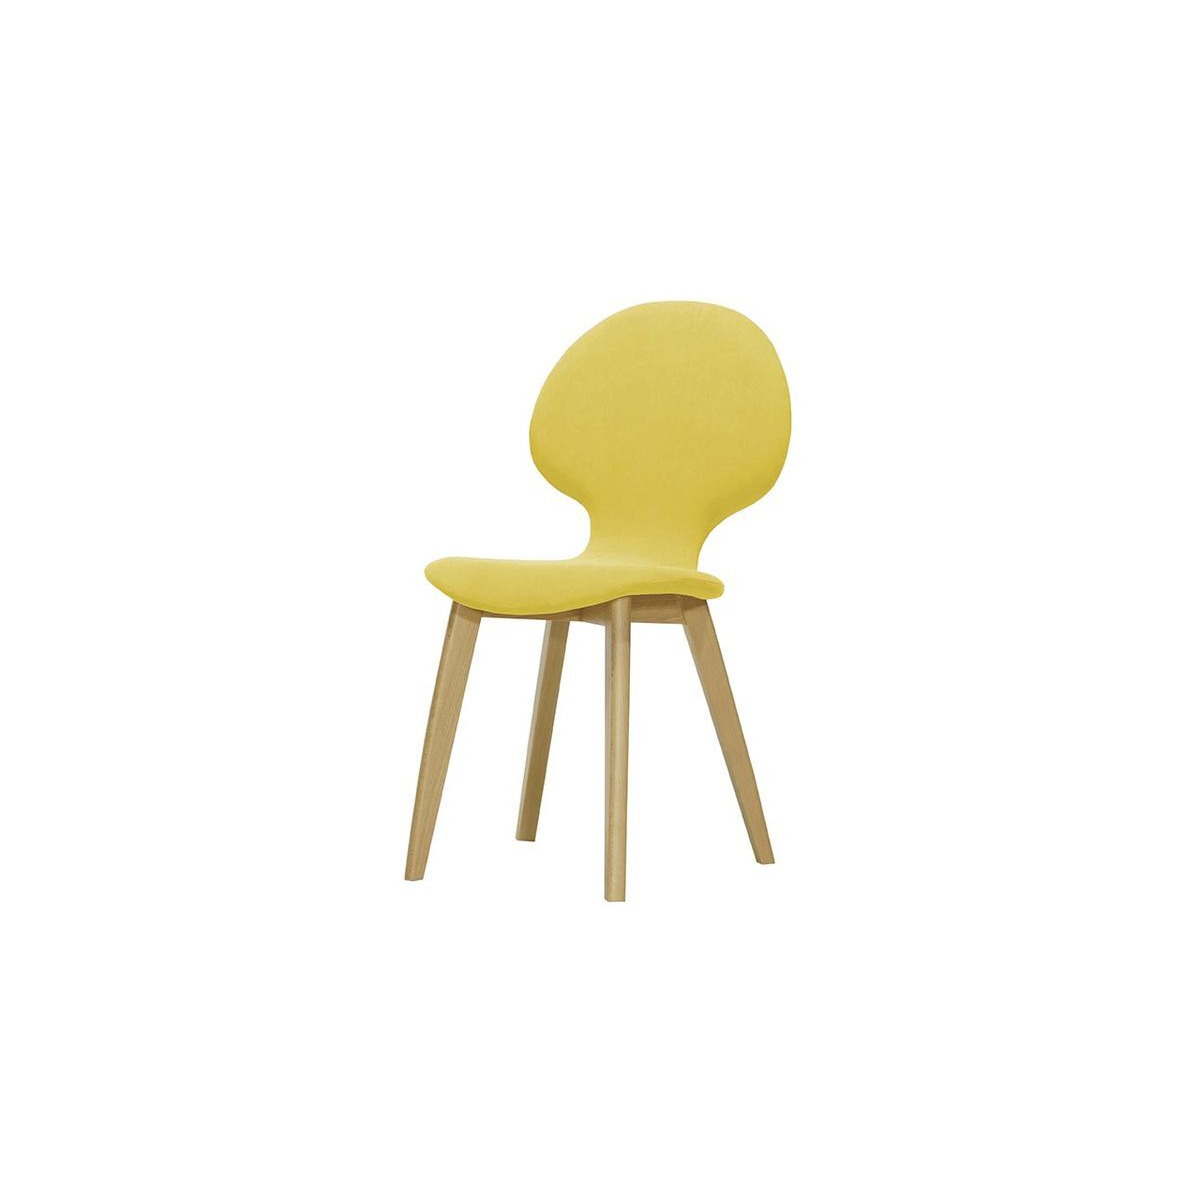 Mya Dining Chair, yellow, Leg colour: like oak - image 1